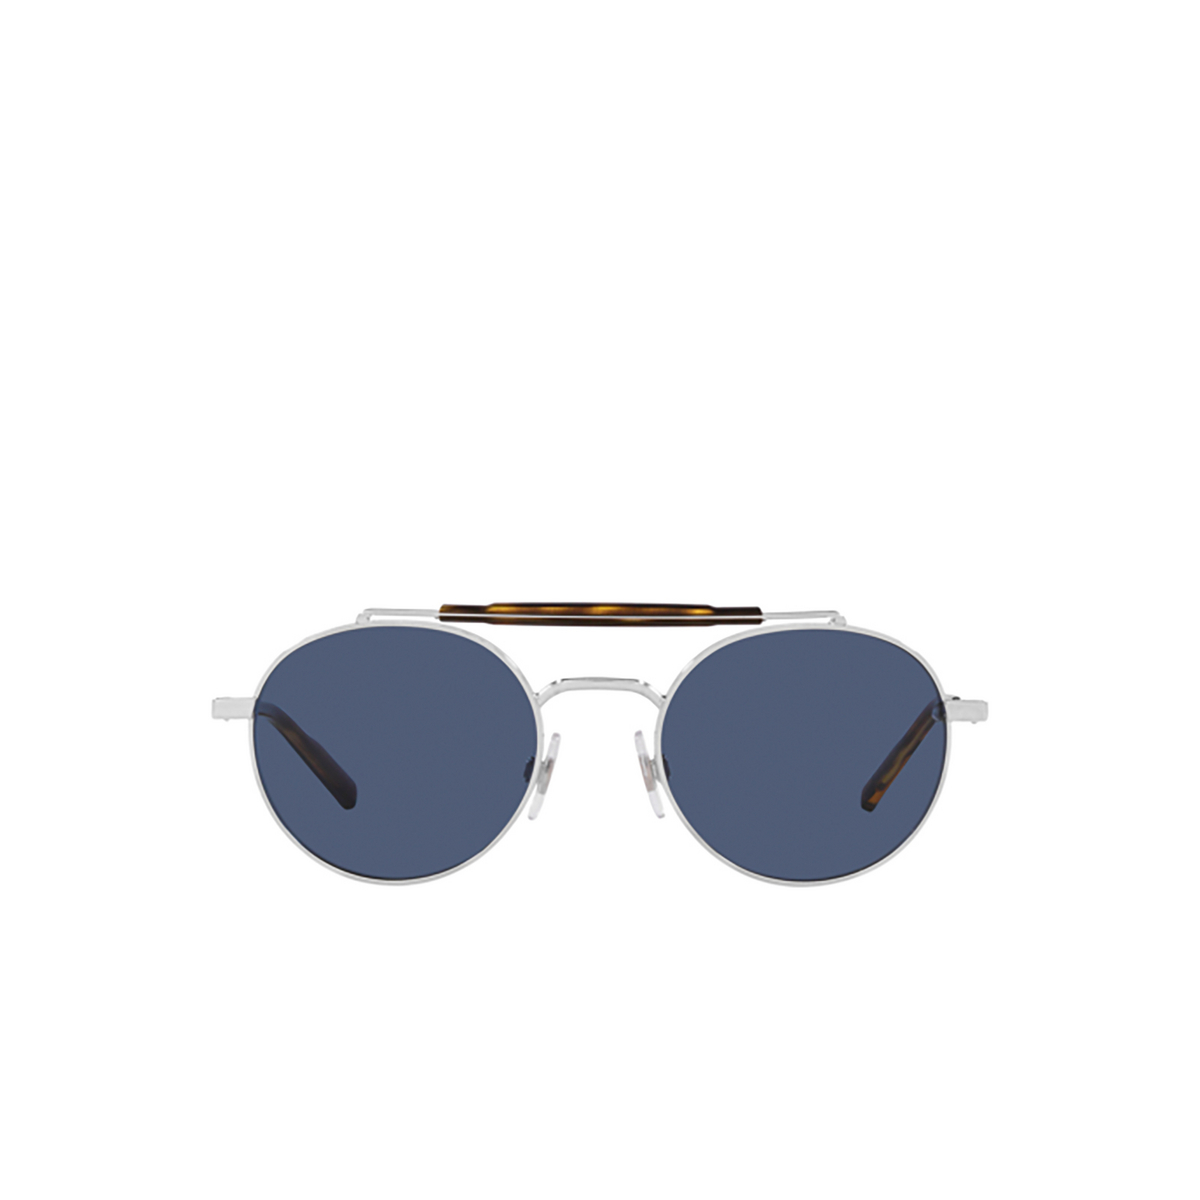 Dolce & Gabbana DG2295 Sunglasses 05/80 Silver - front view